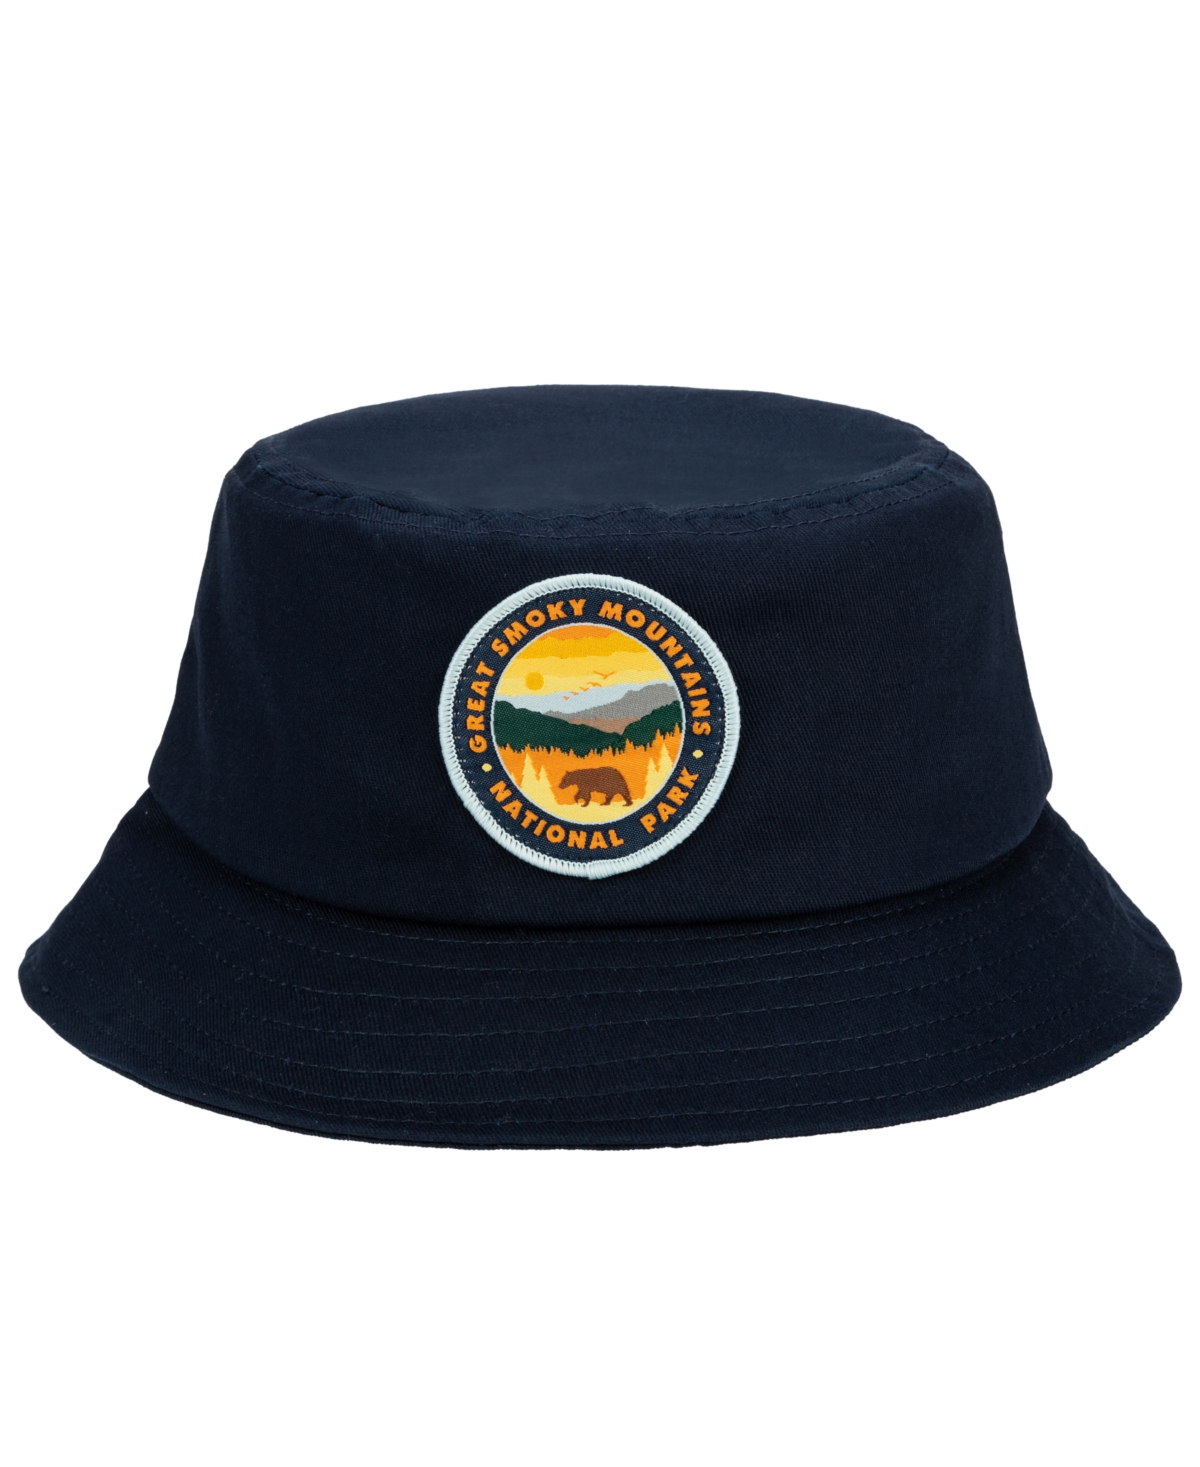 Men's Bucket Hat - Smoky Mountain Navy